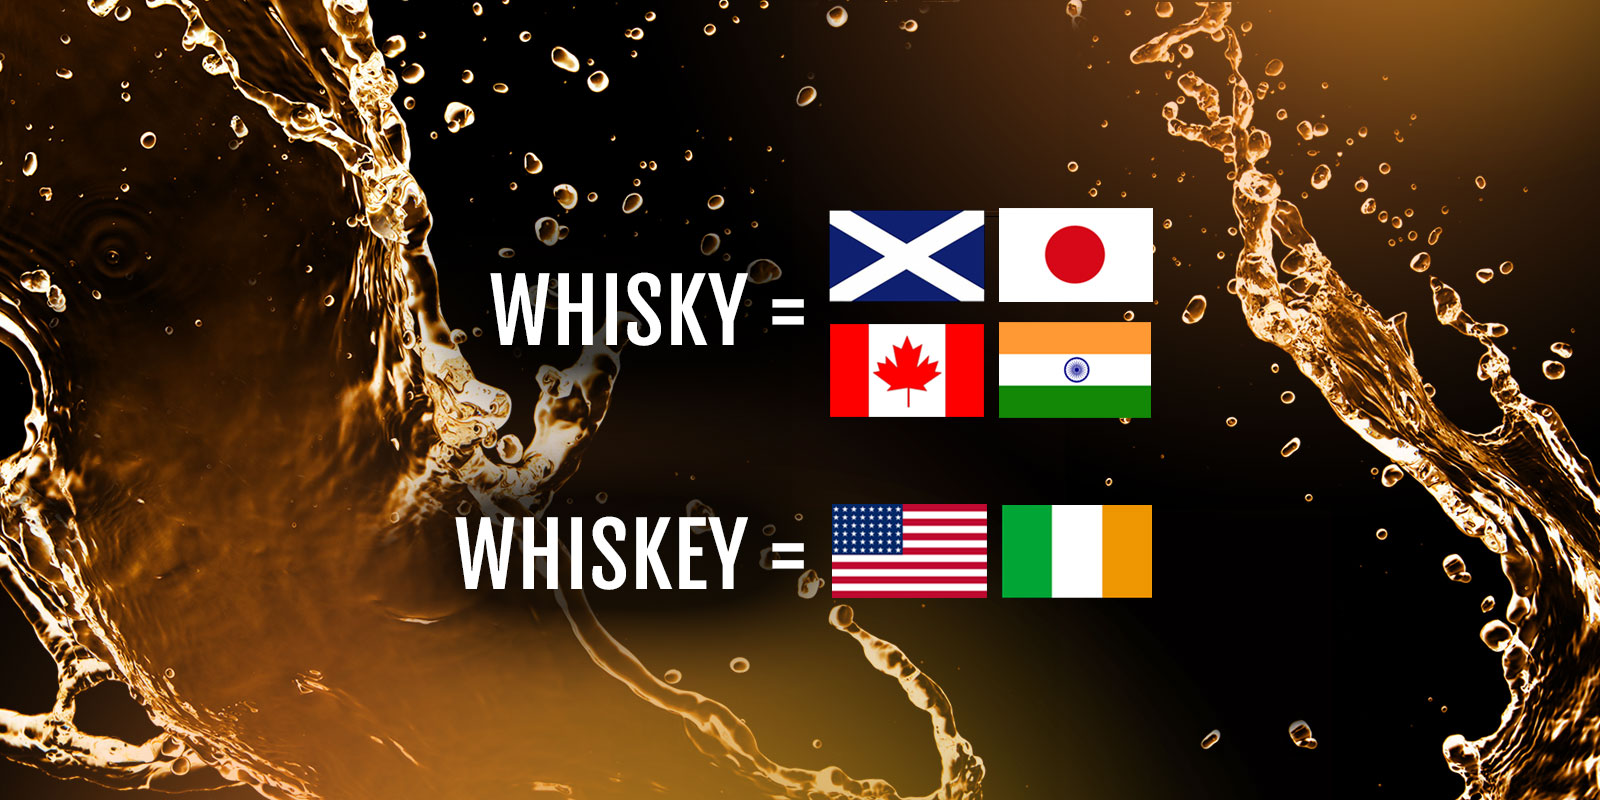 Whisky or Whiskey?